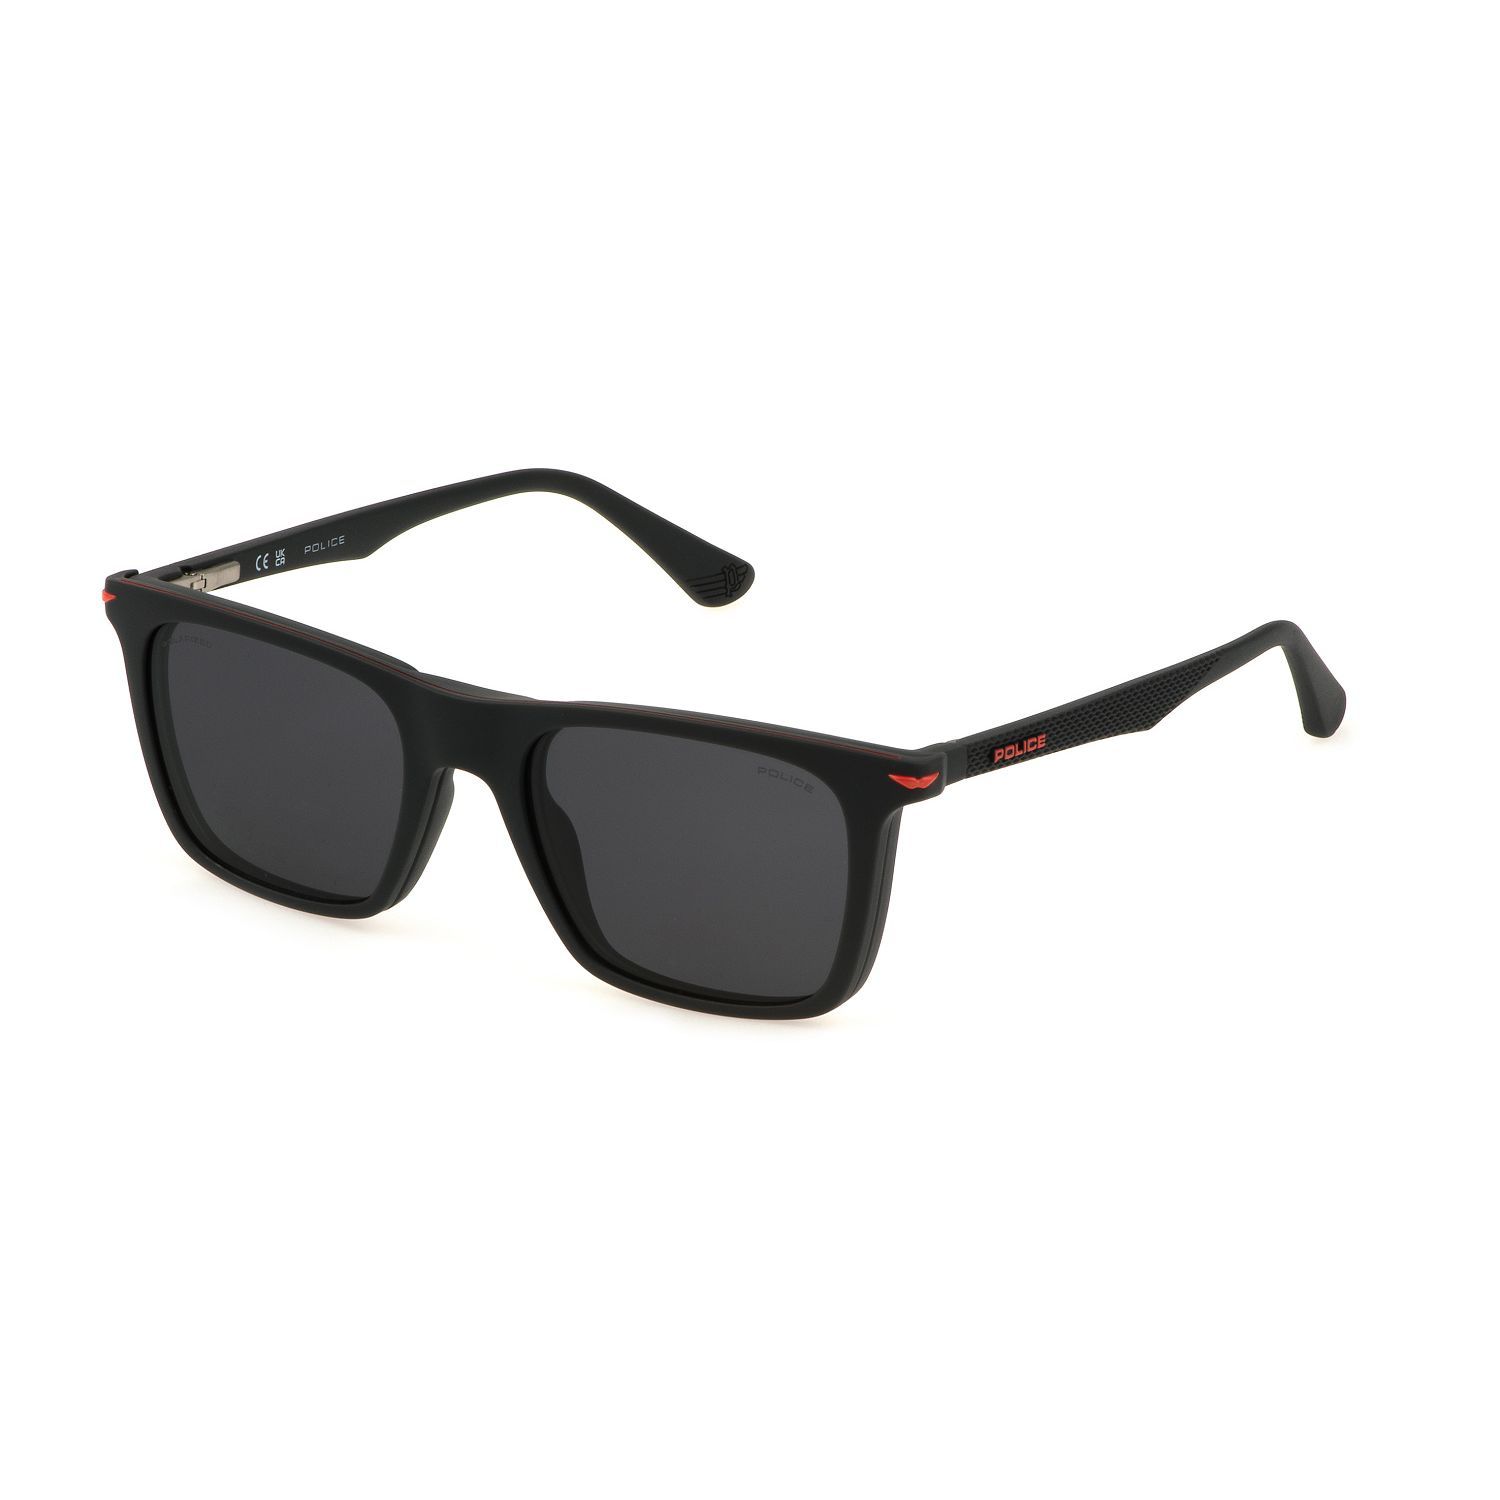 UK136 Square Sunglasses I41P - size 50